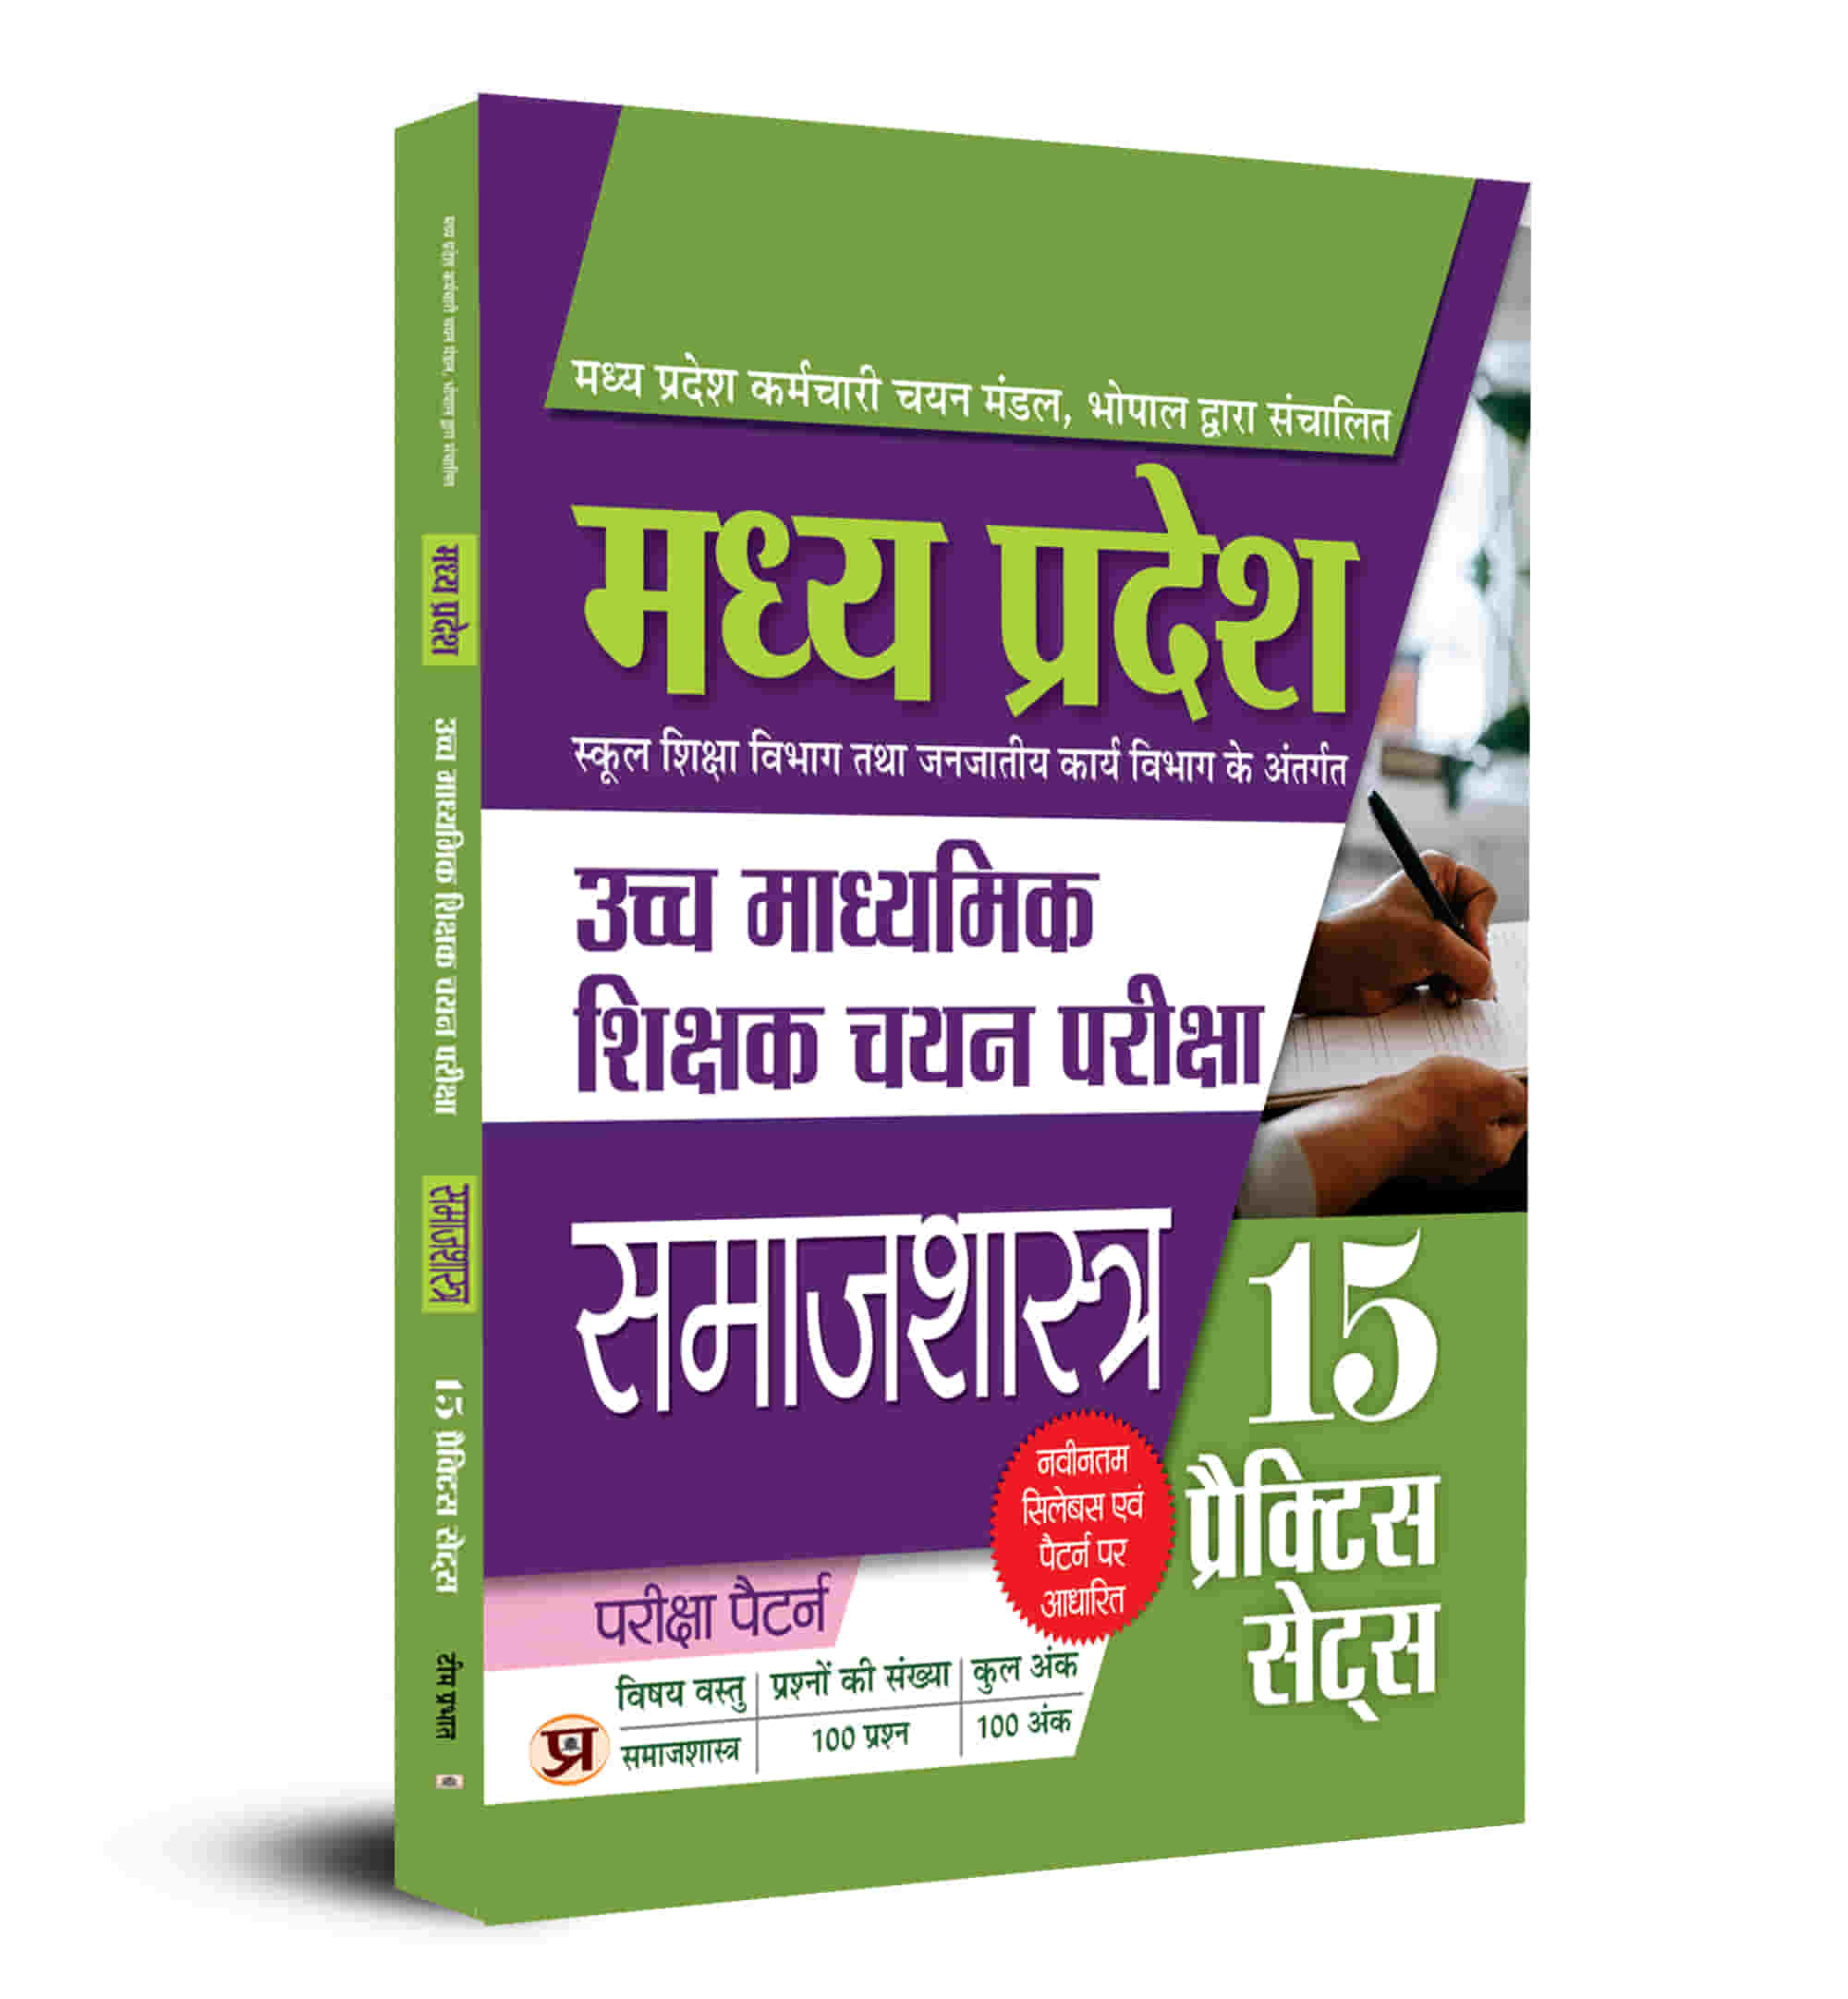 Madhya Pradesh Uchch Madhyamik Shikshak Chayan Pariksha Samajshastra (MP High School Teacher Recruitment Sociology) 15 Practice Sets